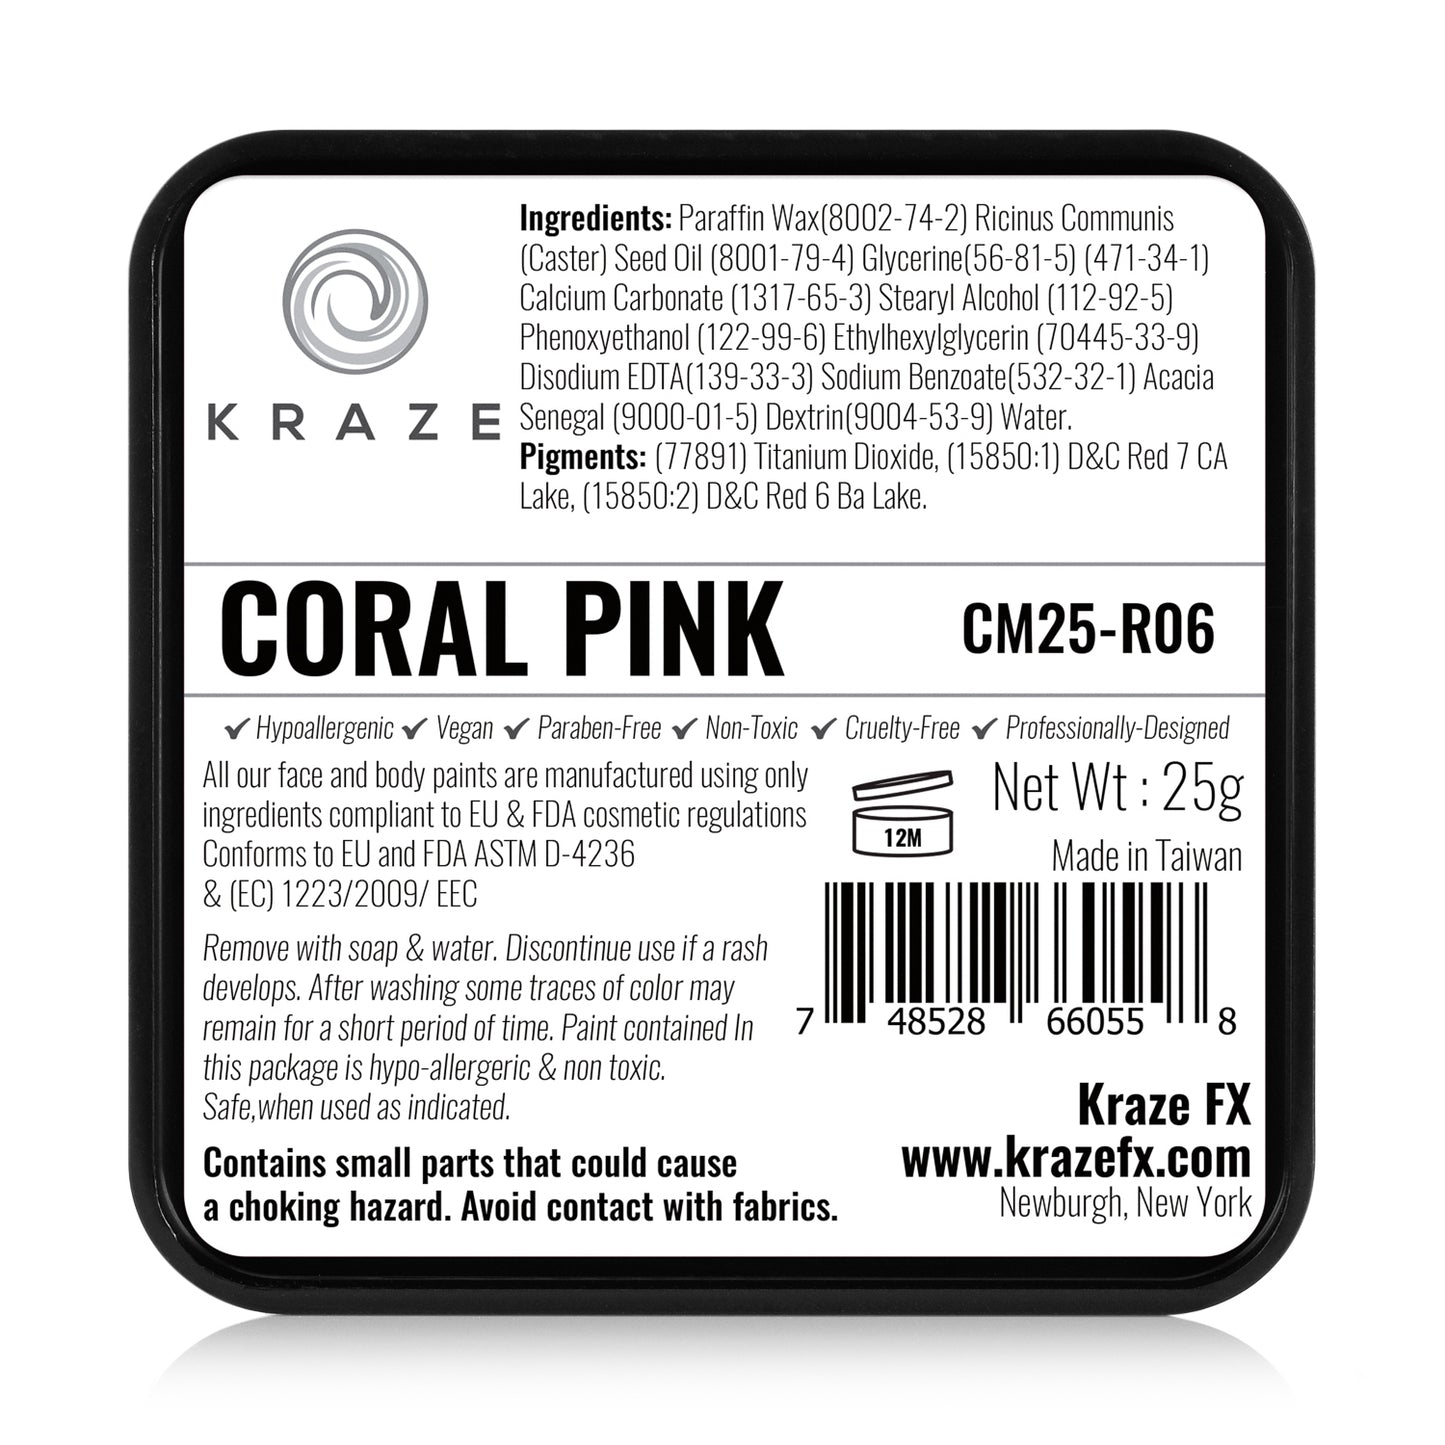 Kraze FX Face & Body Paint - Coral Pink (25 gm)